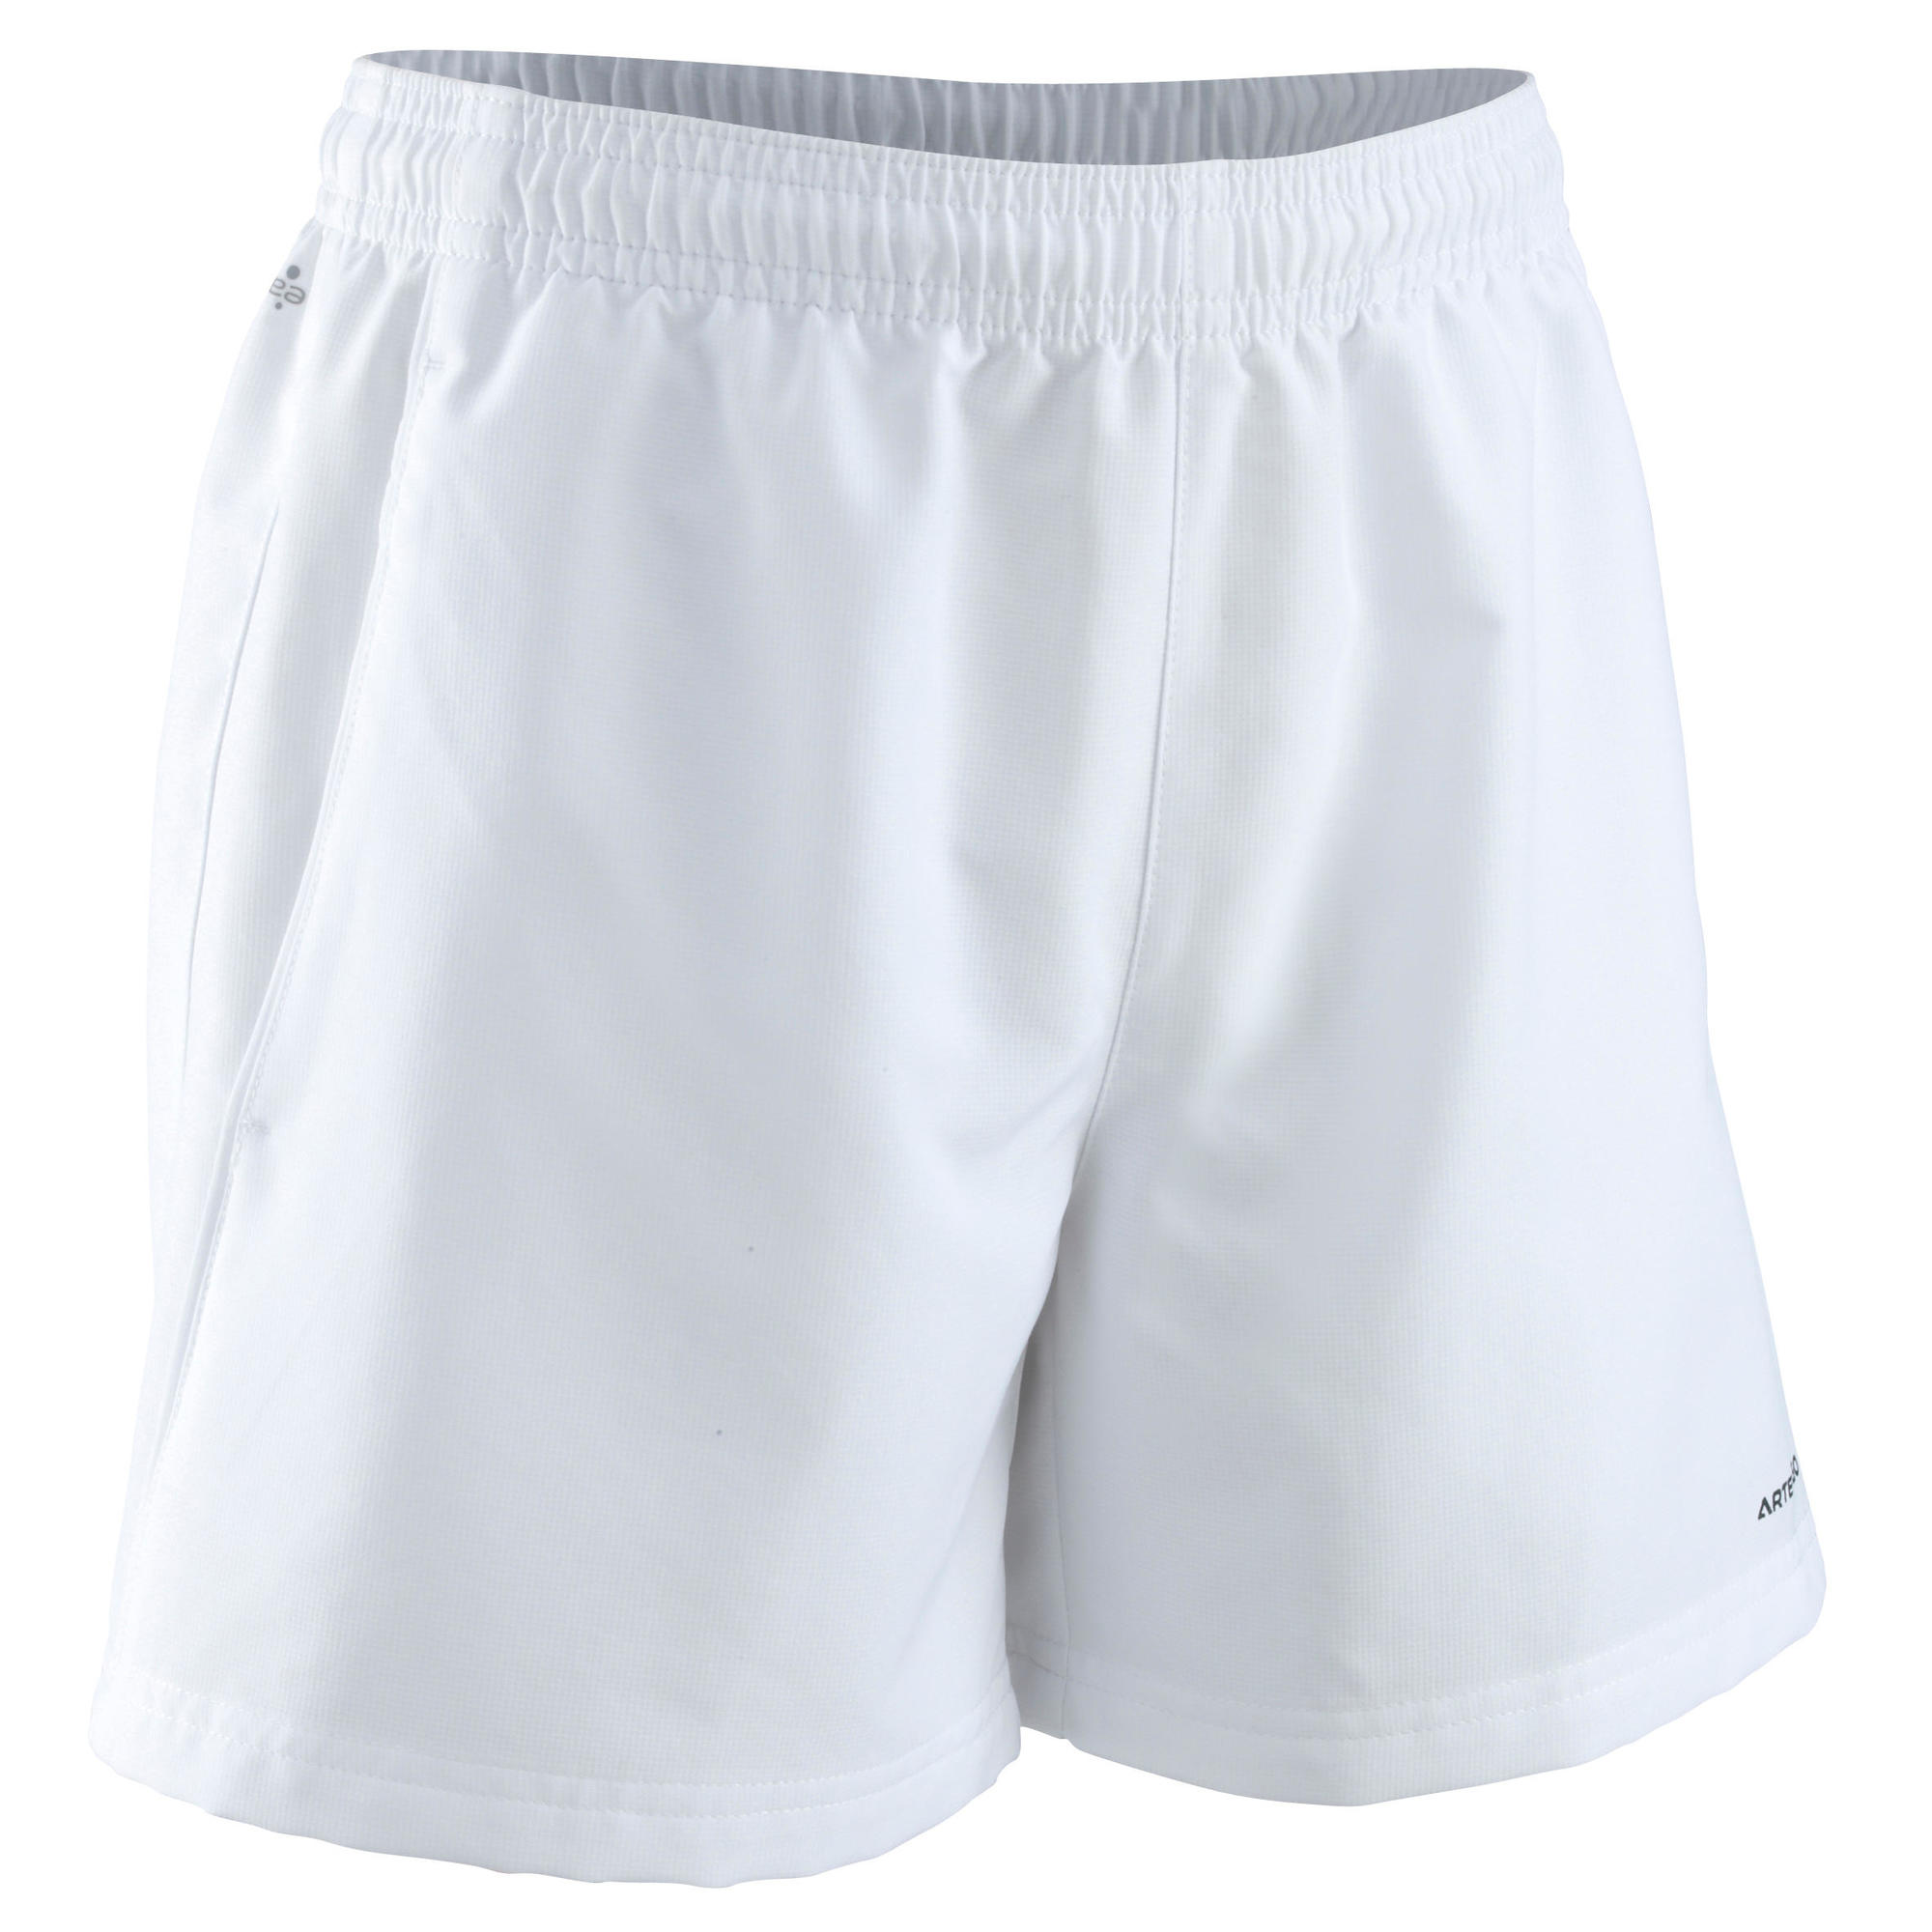 artengo badminton shorts